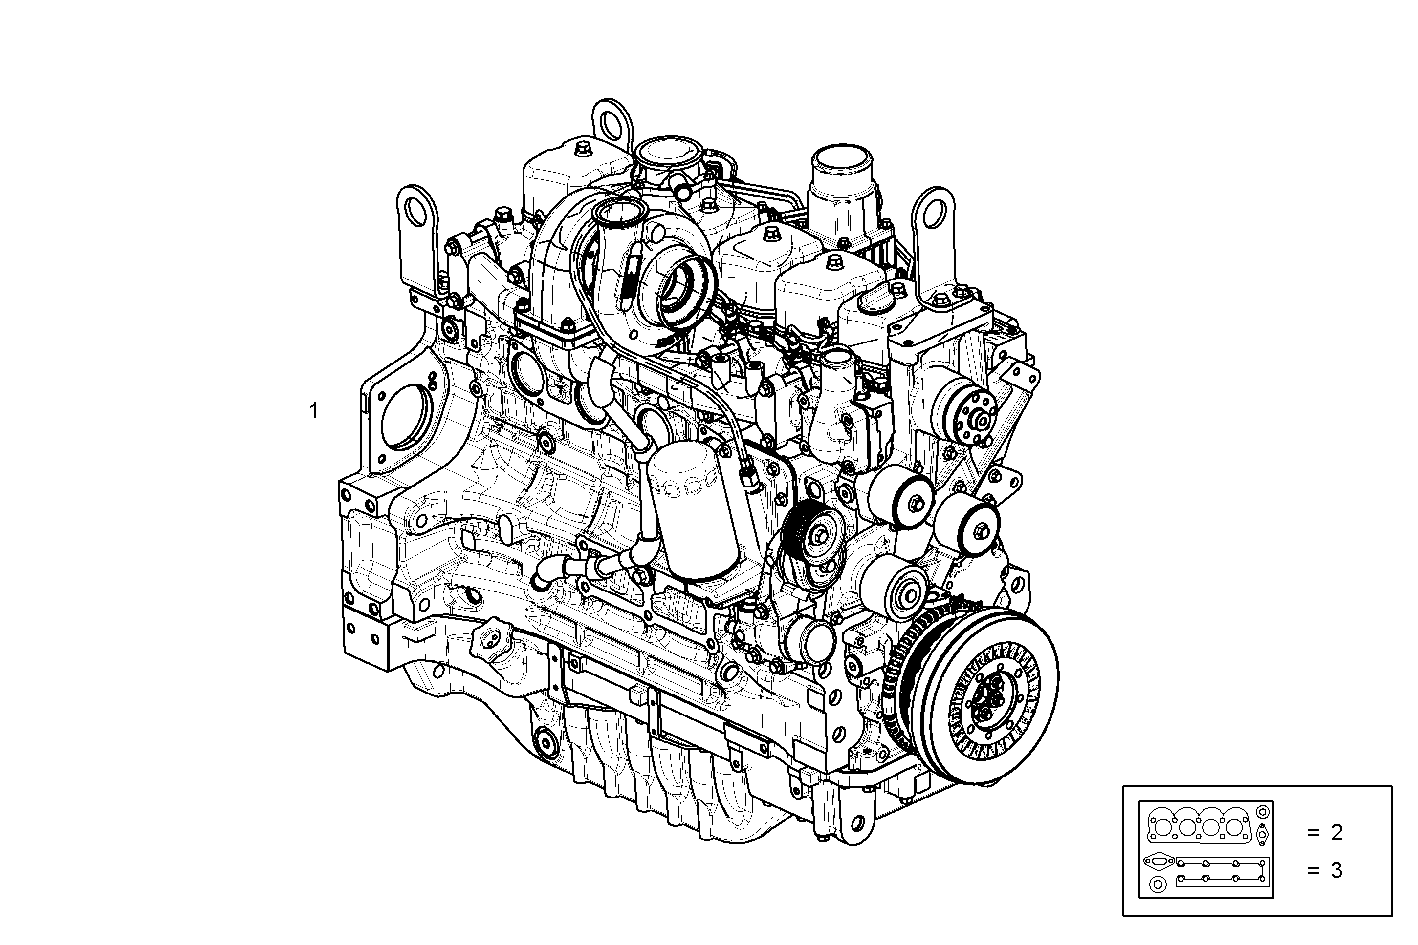 COMPLETE ENGINE